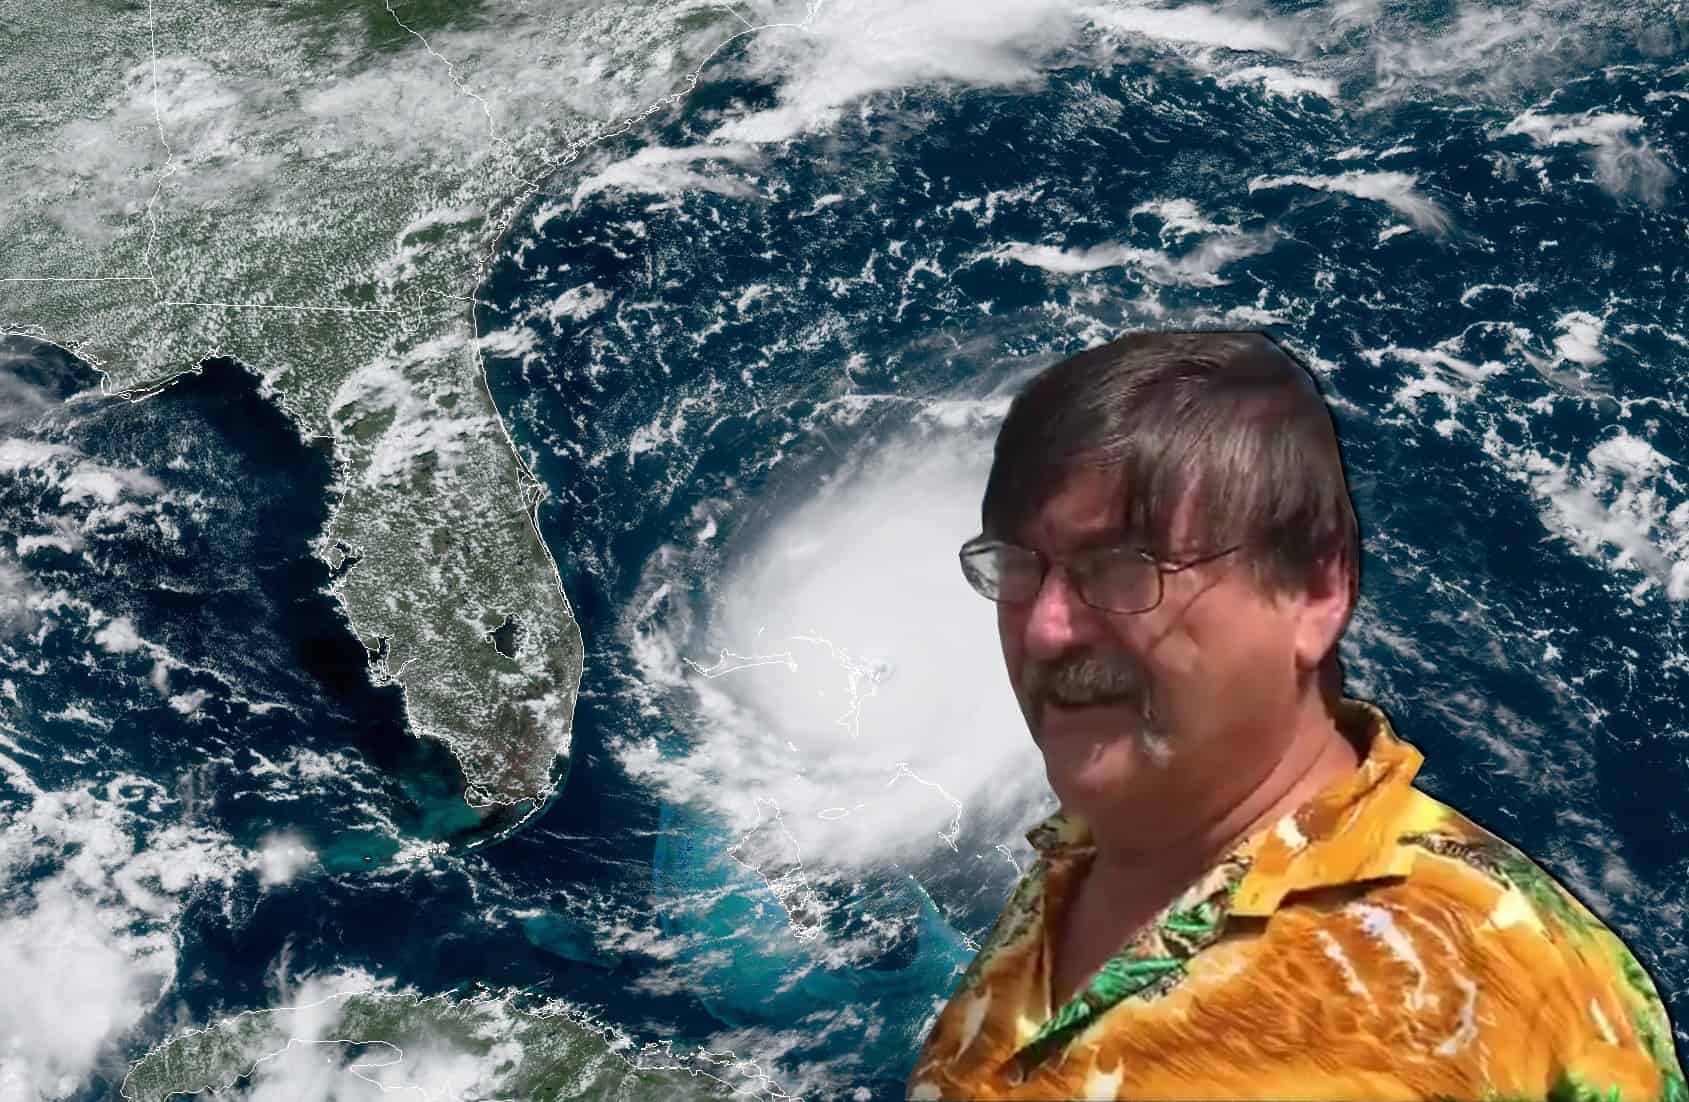 Florida man suggests throwing ice at hurricane